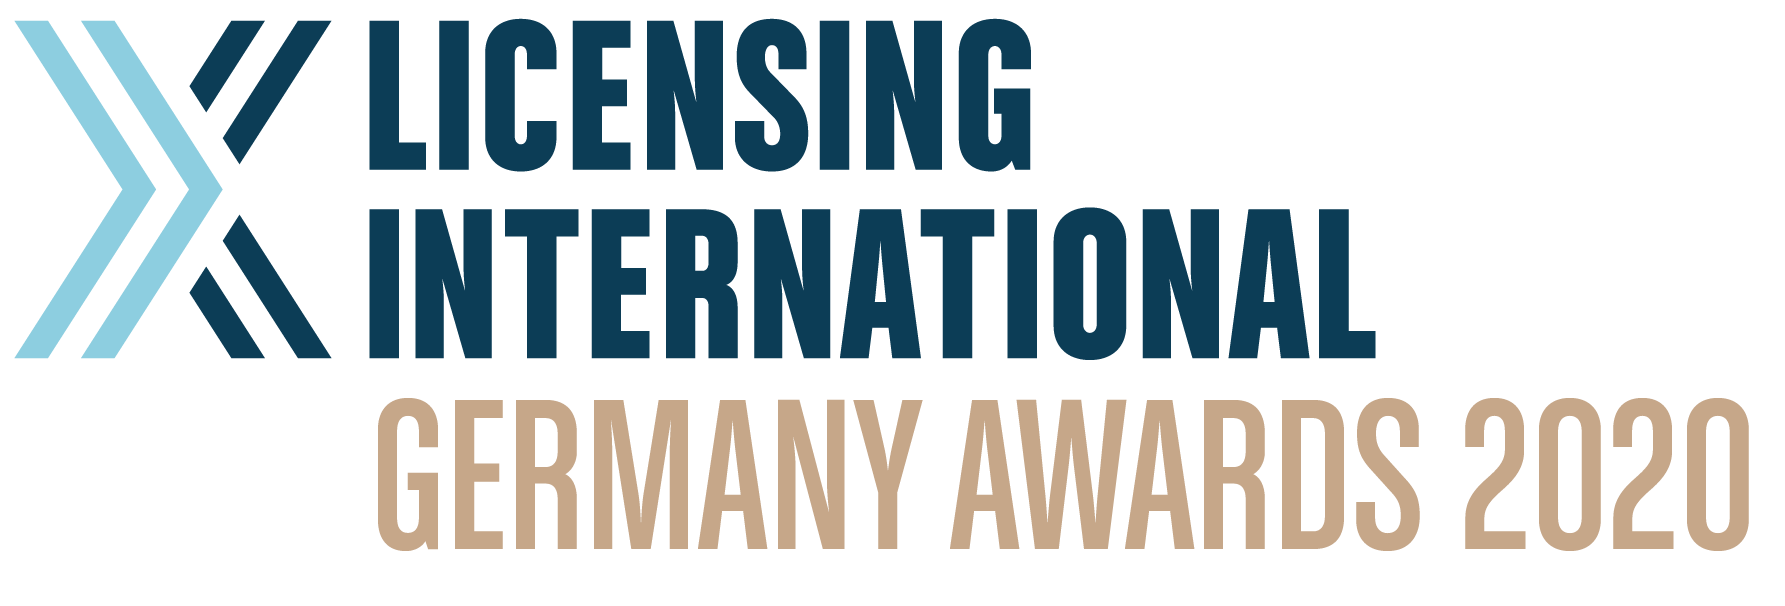 Licensing International Germany Announces 2020 Award Winners image